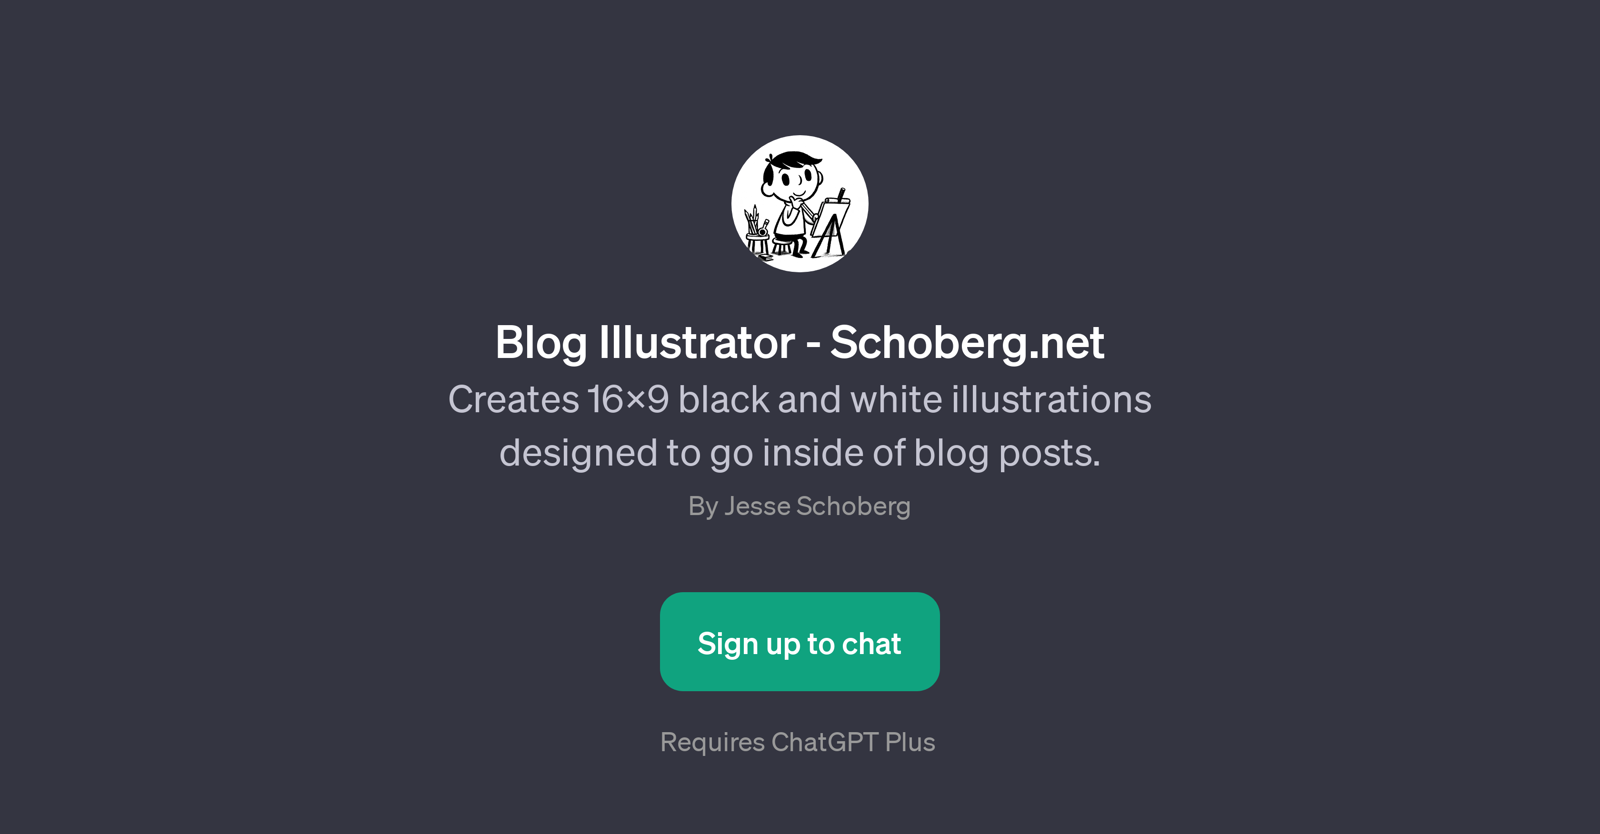 Blog Illustrator - Schoberg.net website